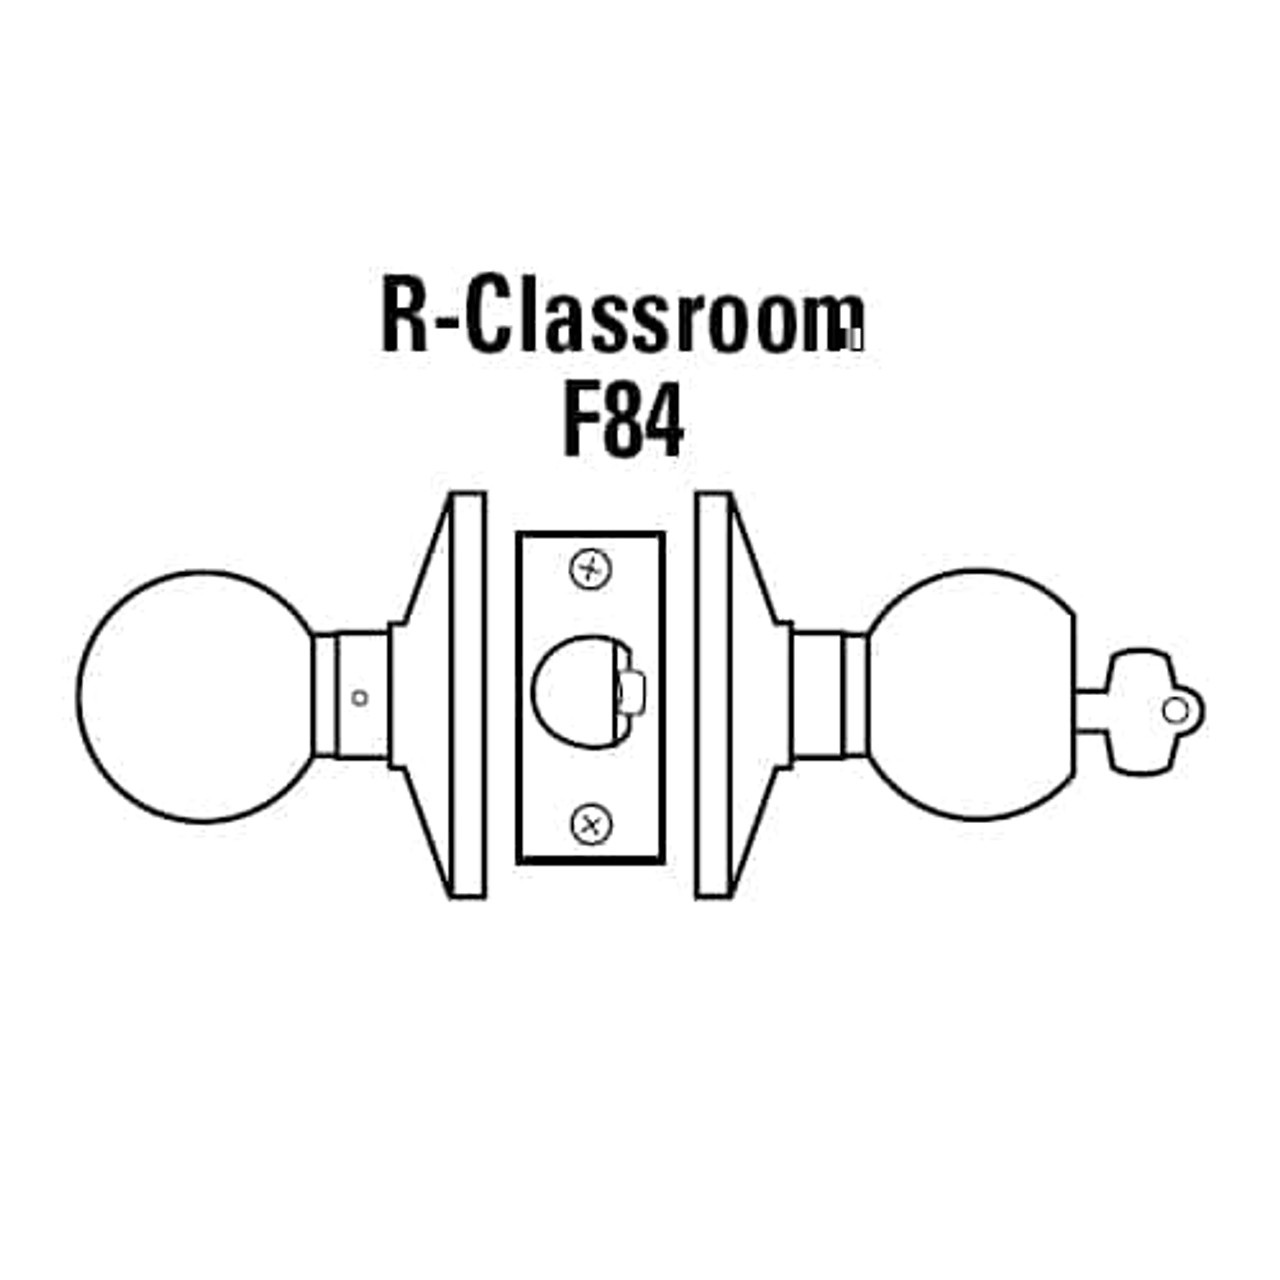 6K27R4DSTK625 Best 6K Series Medium Duty Classroom Cylindrical Knob Locks with Round Style in Bright Chrome